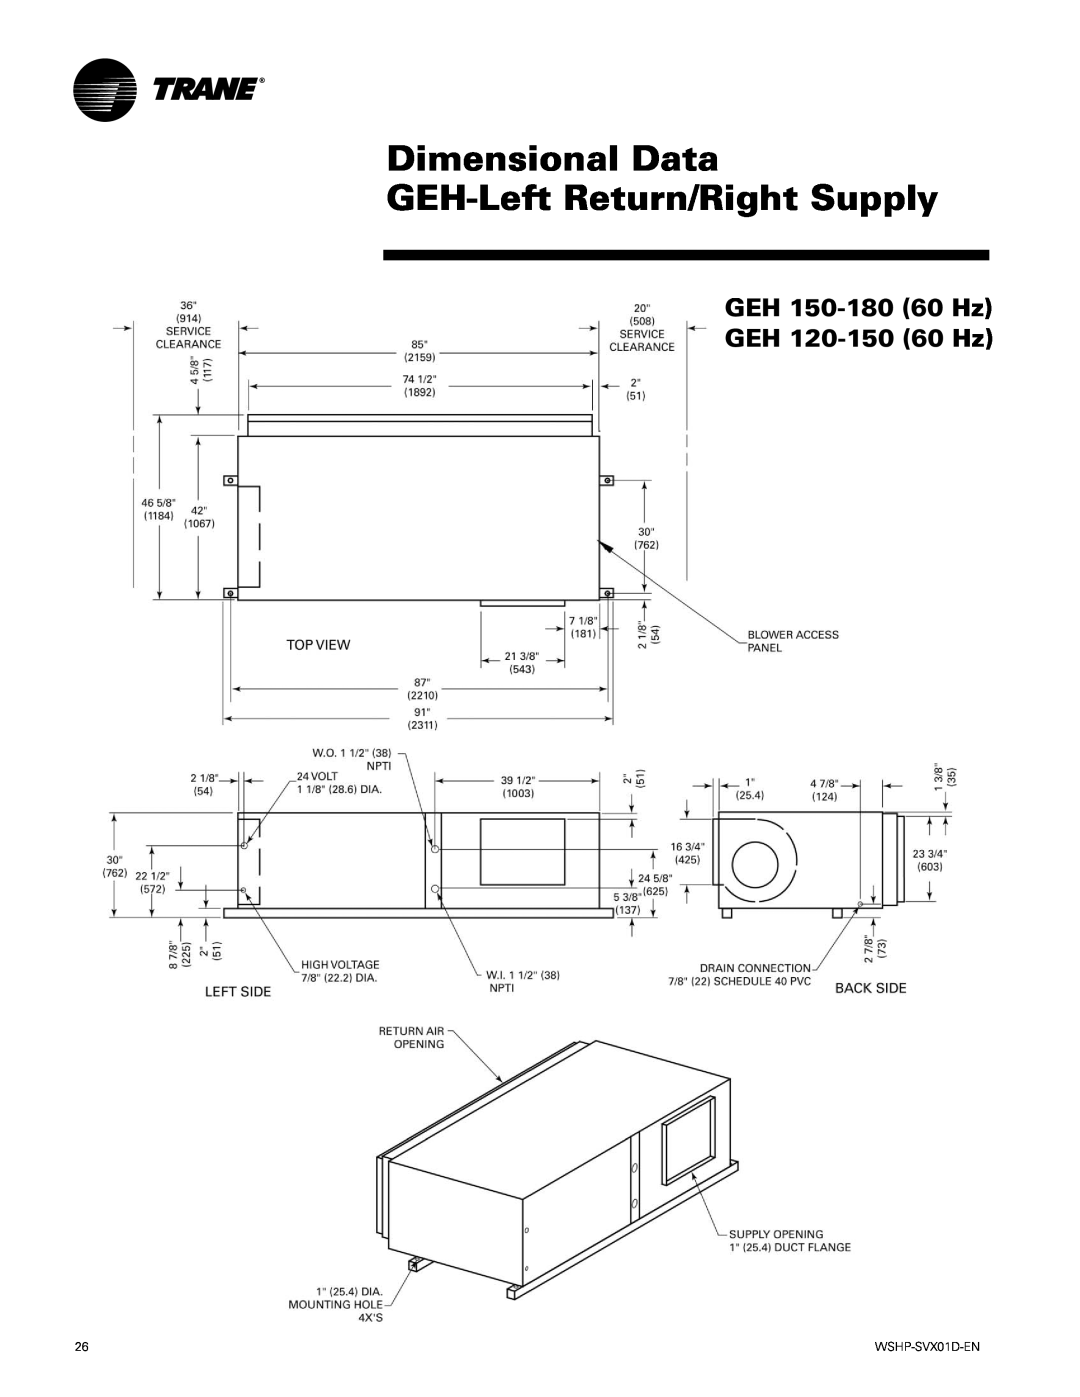 Trane GEV manual GEH 150-18060 Hz GEH 120-15060 Hz, Dimensional Data GEH-LeftReturn/Right Supply 